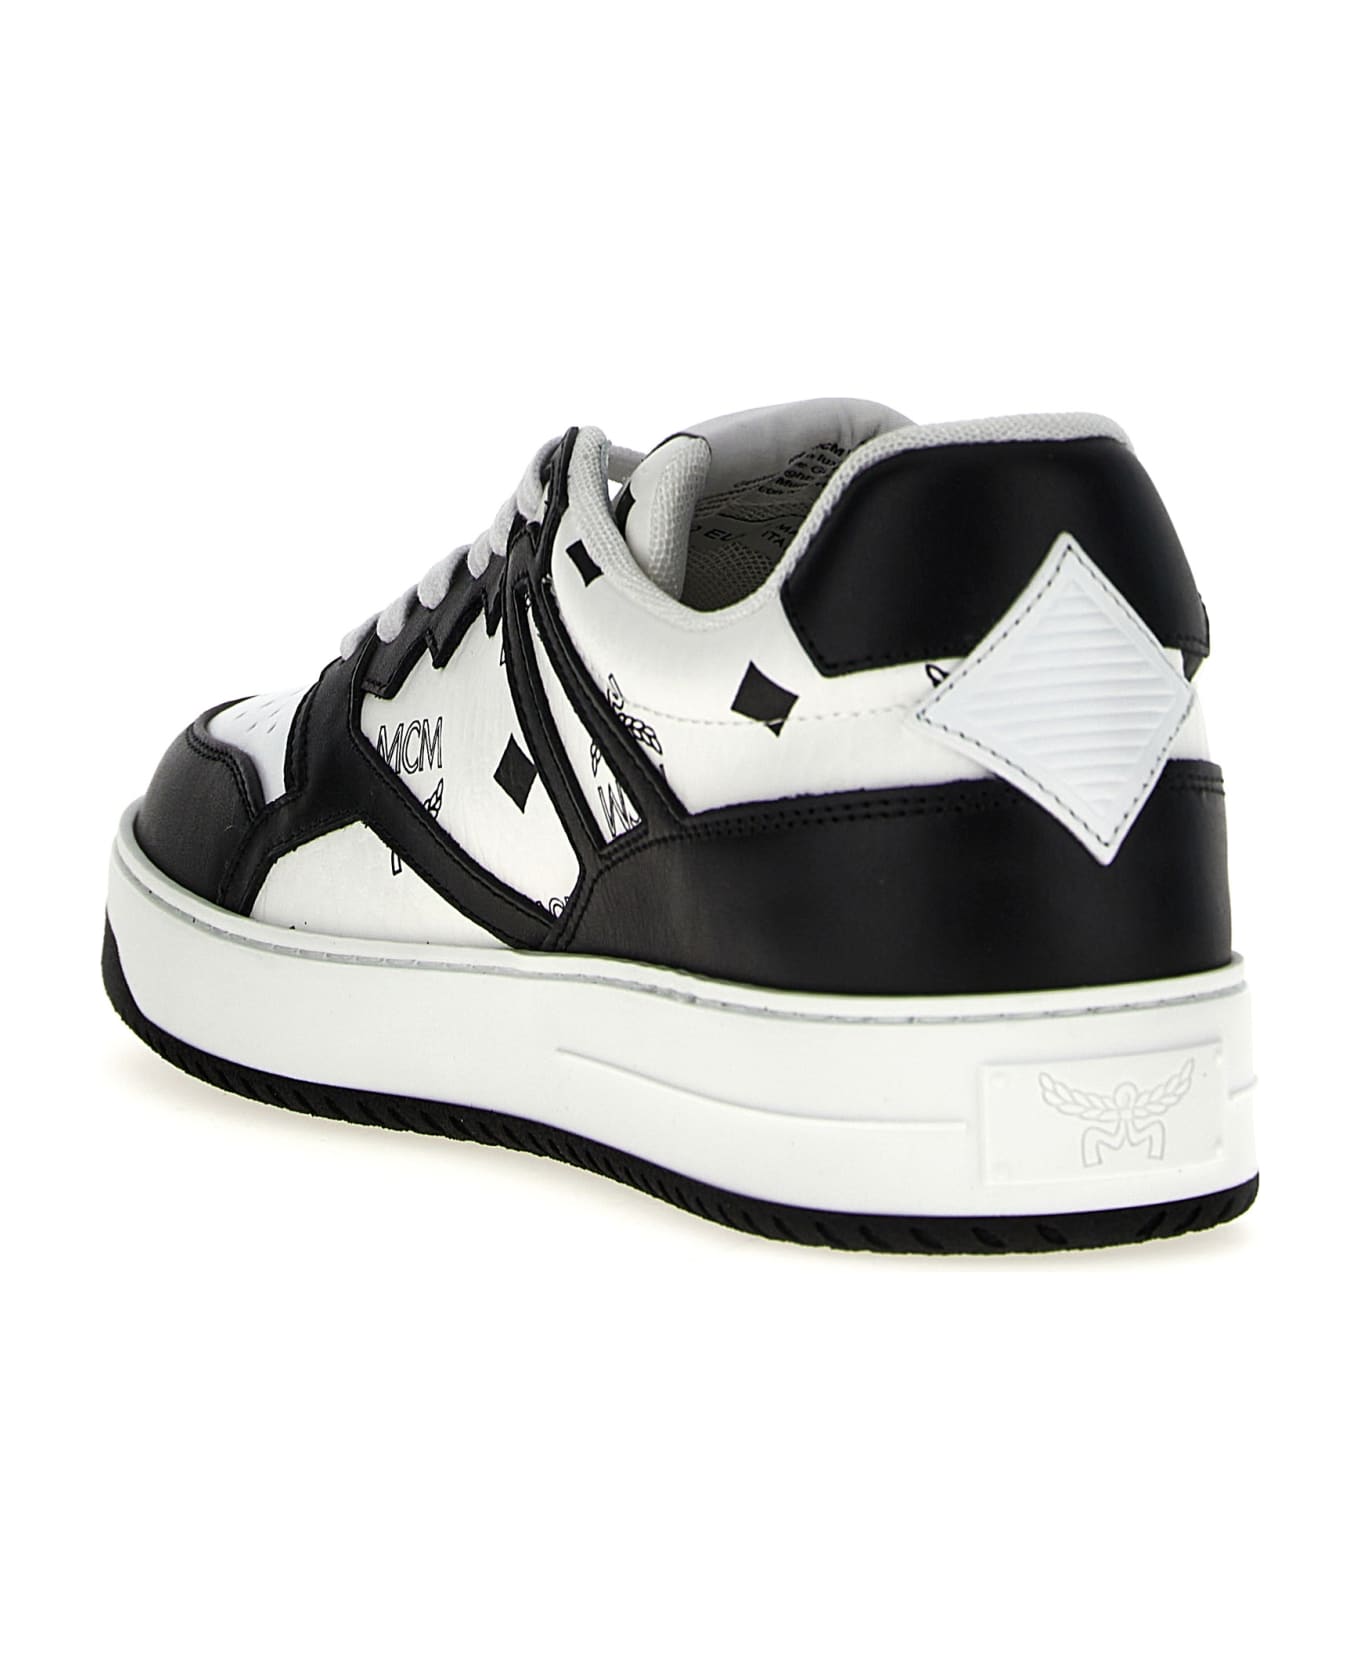 MCM 'neo Terrain' Sneakers - White/Black